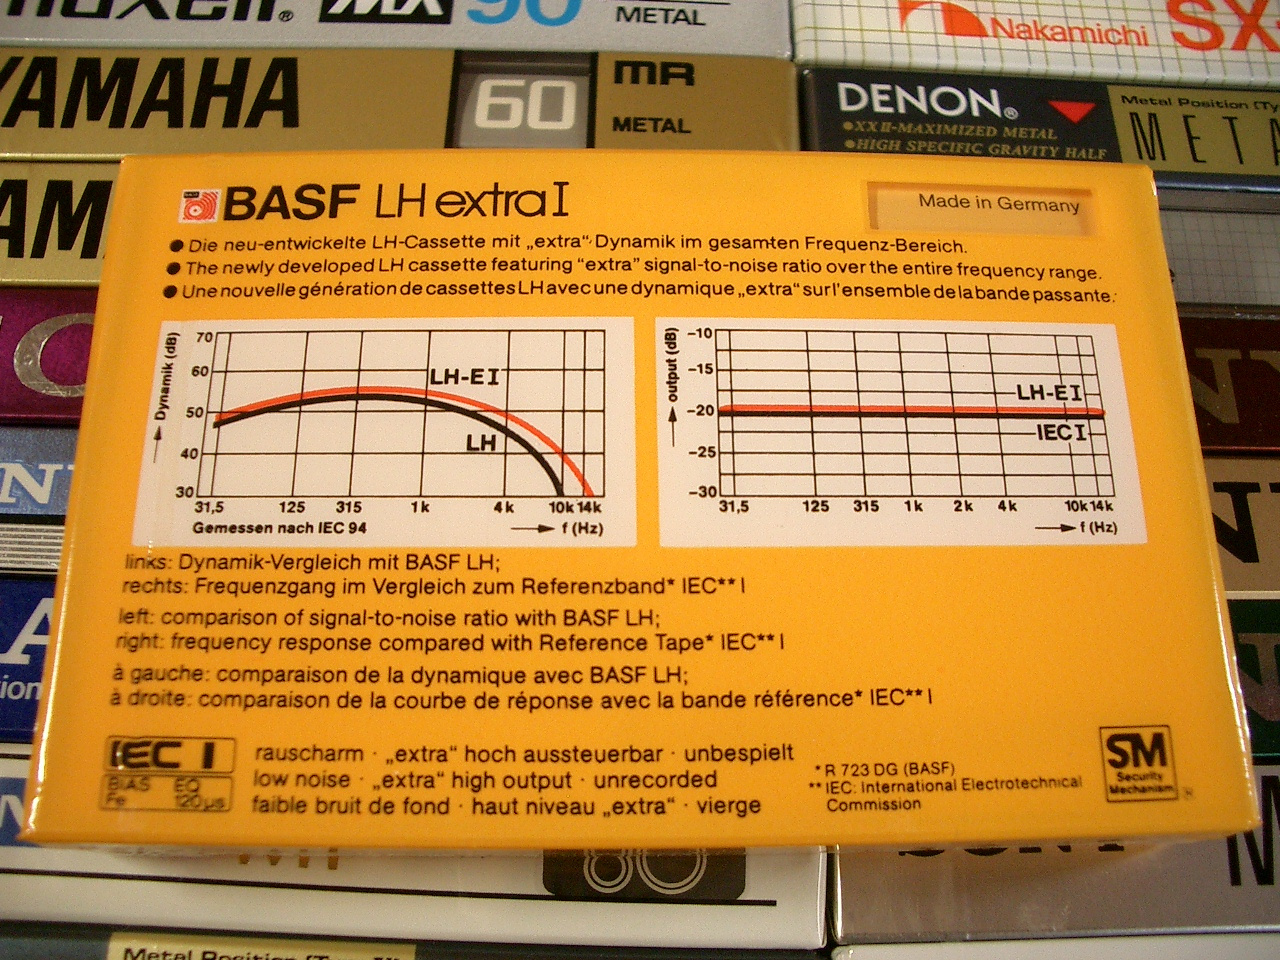 BASF LH-EI 60 Ger SM printed on the cassette shell RARE 1981 b